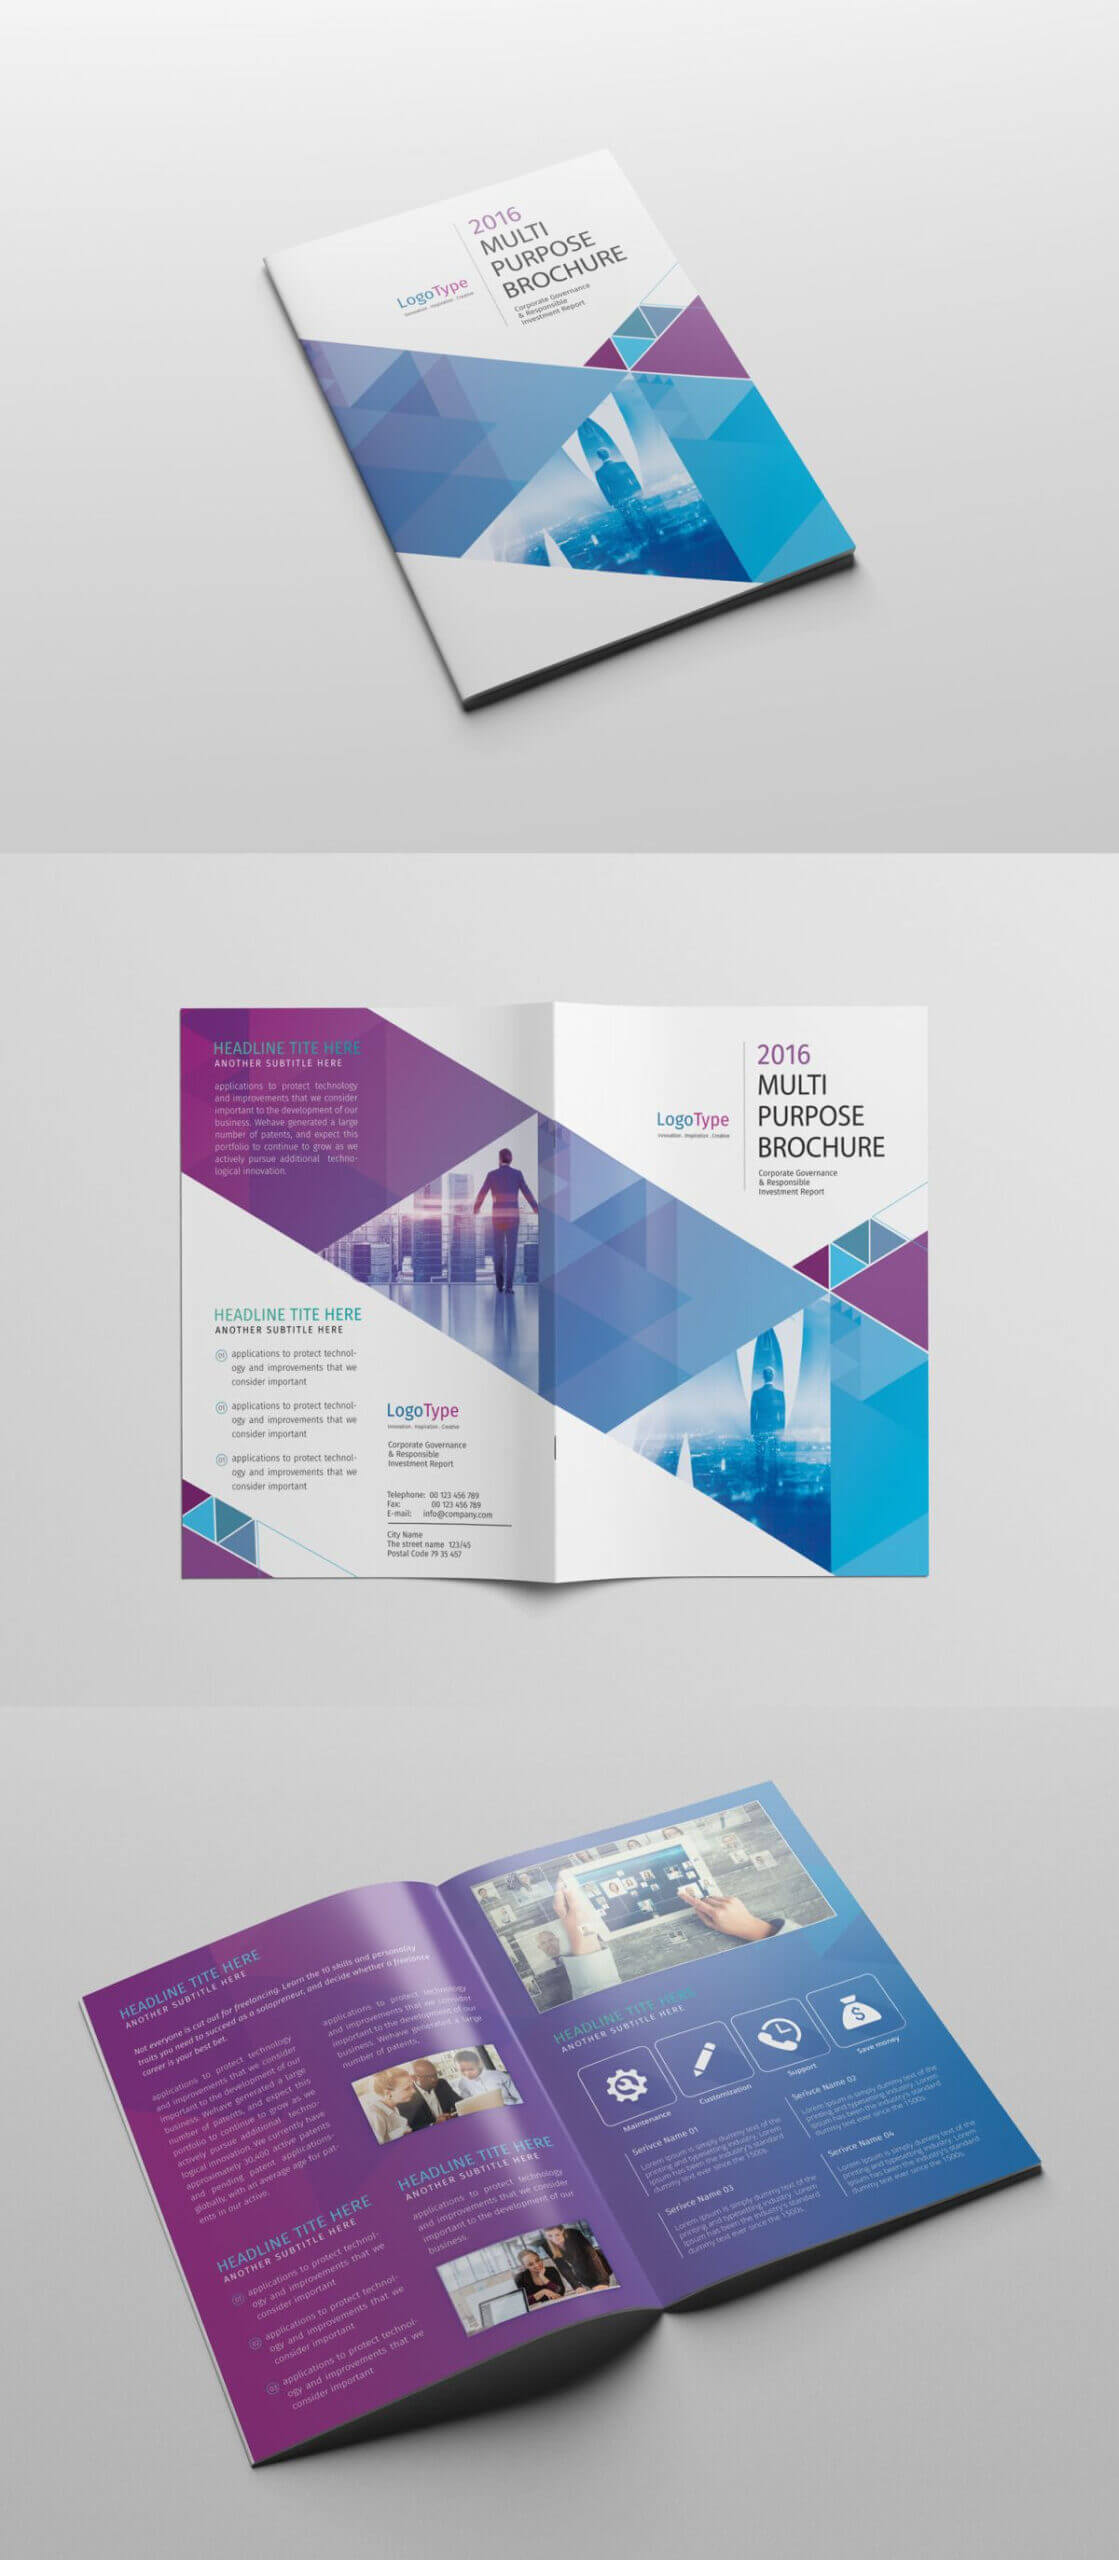 Abstract Bi Fold Brochure Template Psd | Desain For Two Fold Brochure Template Psd